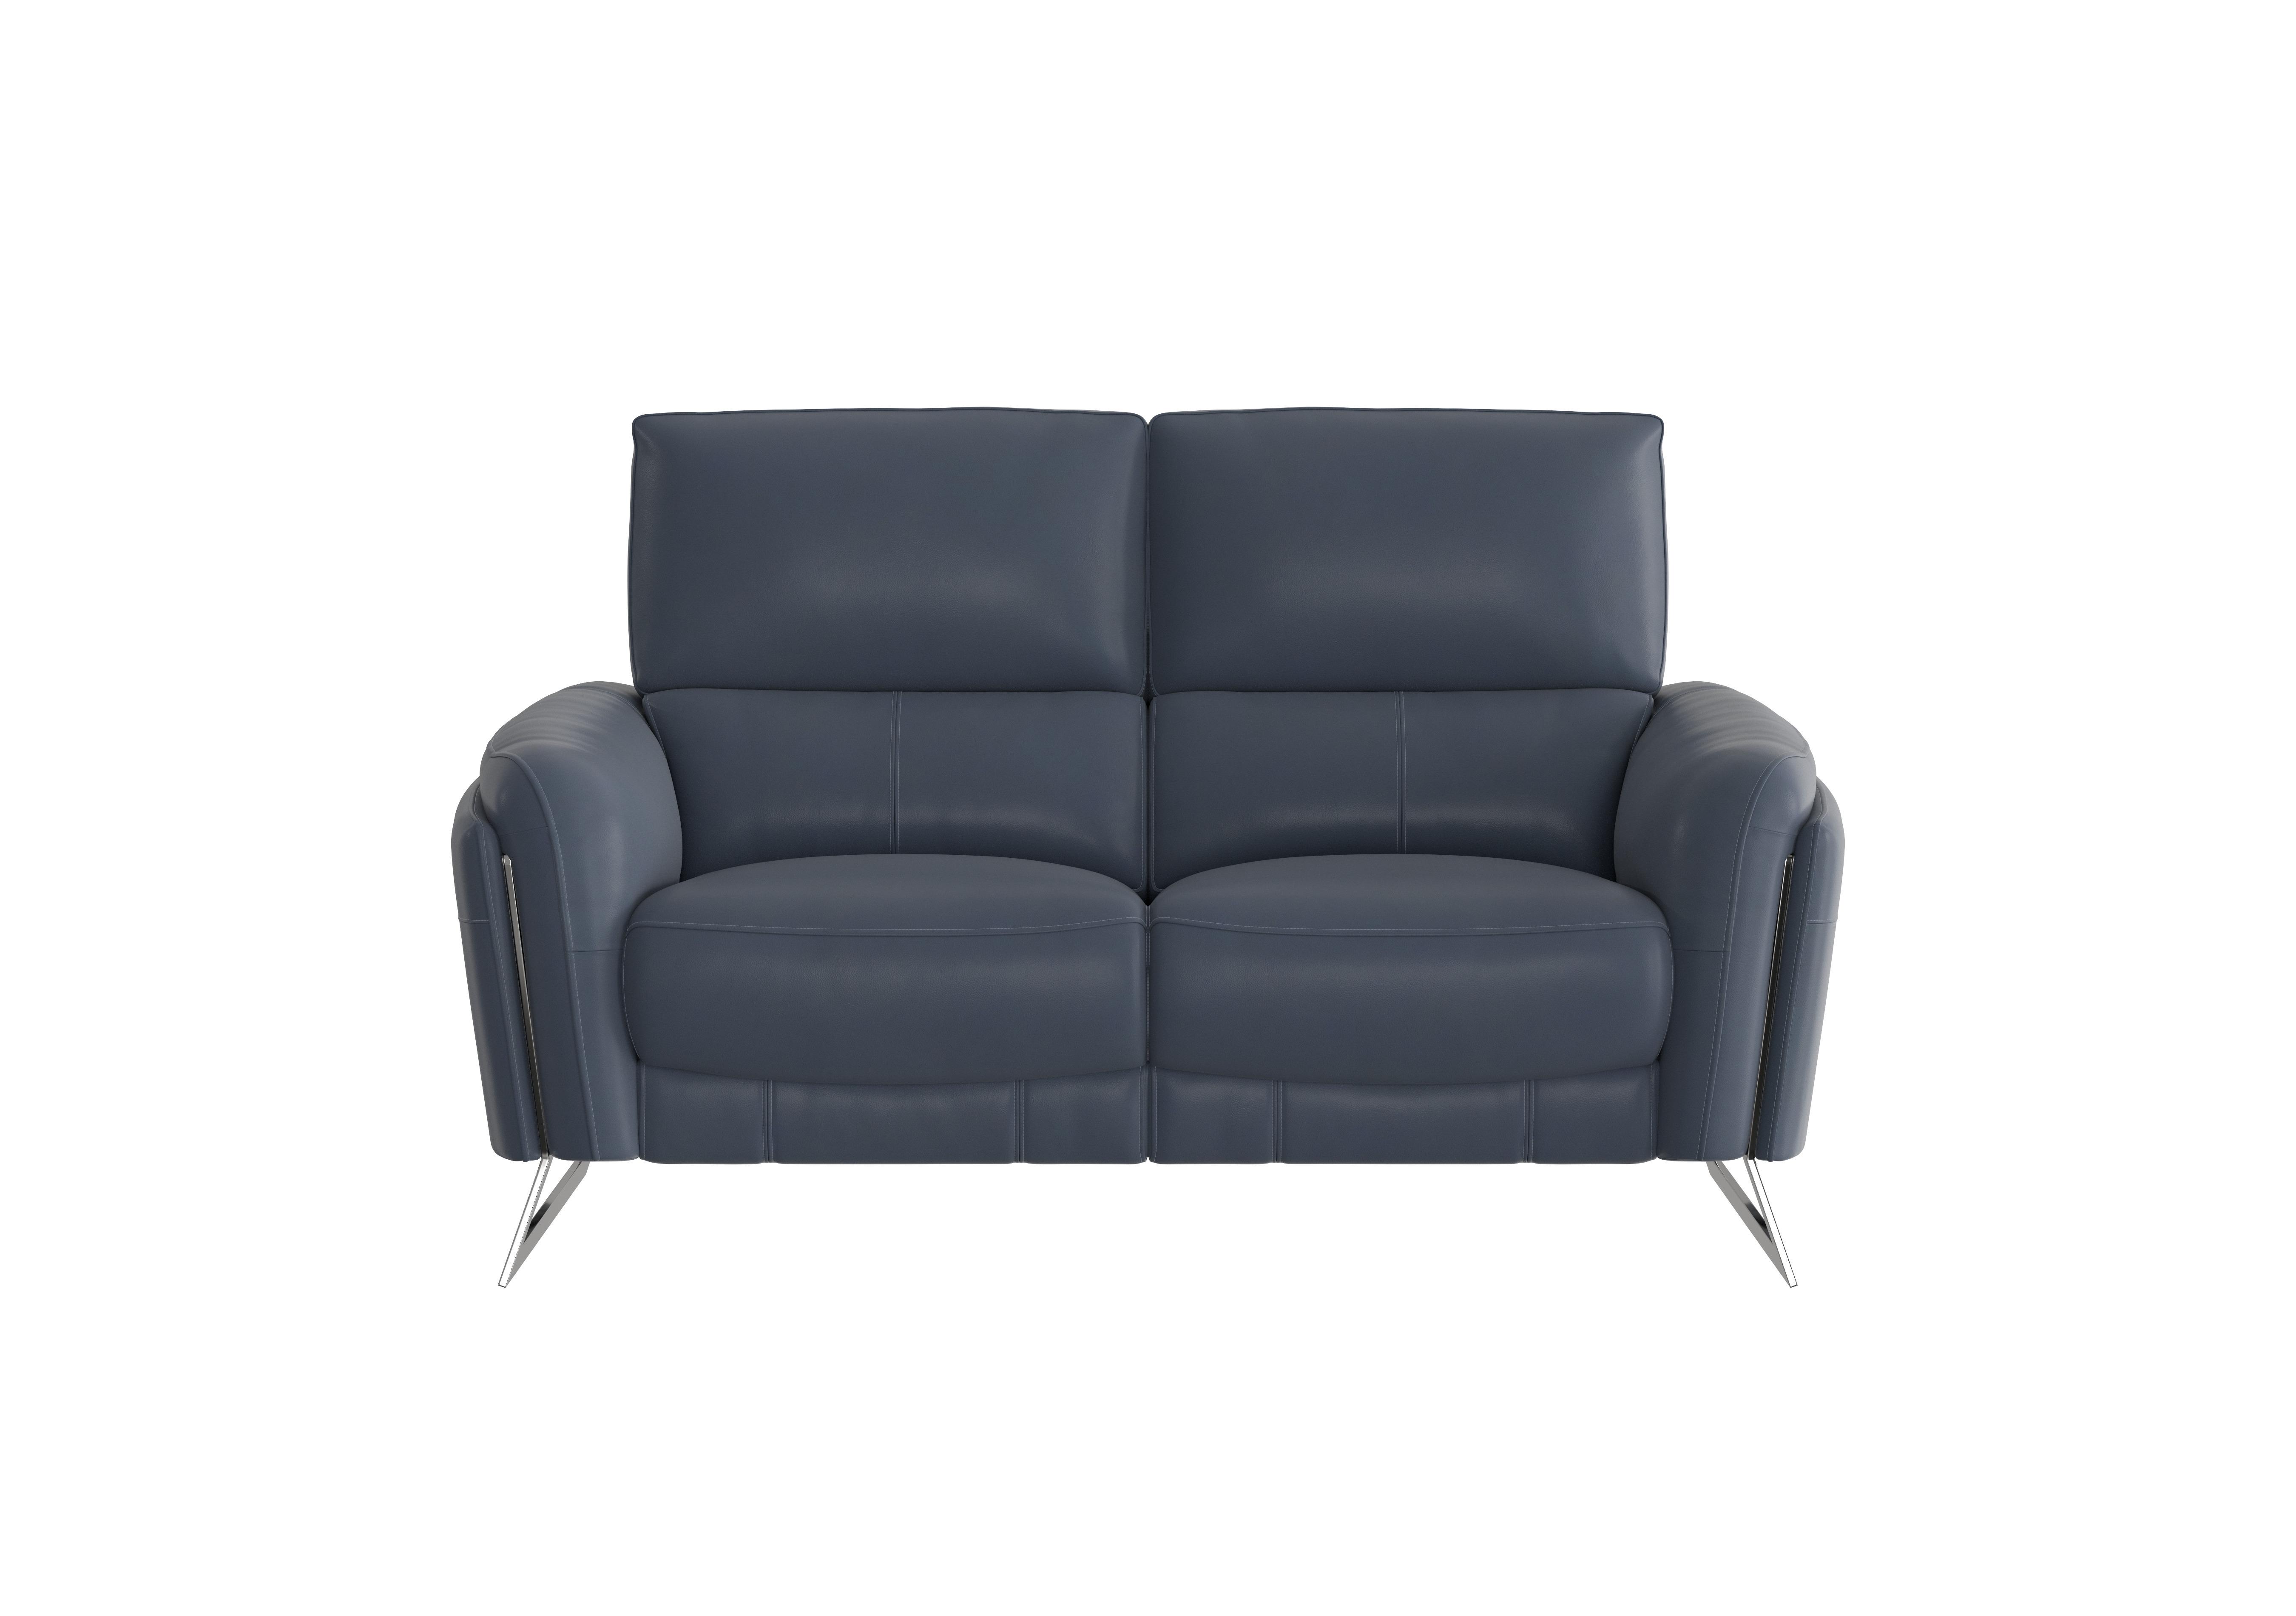 Amarilla 2 Seater Leather Sofa in Bv-313e Ocean Blue on Furniture Village